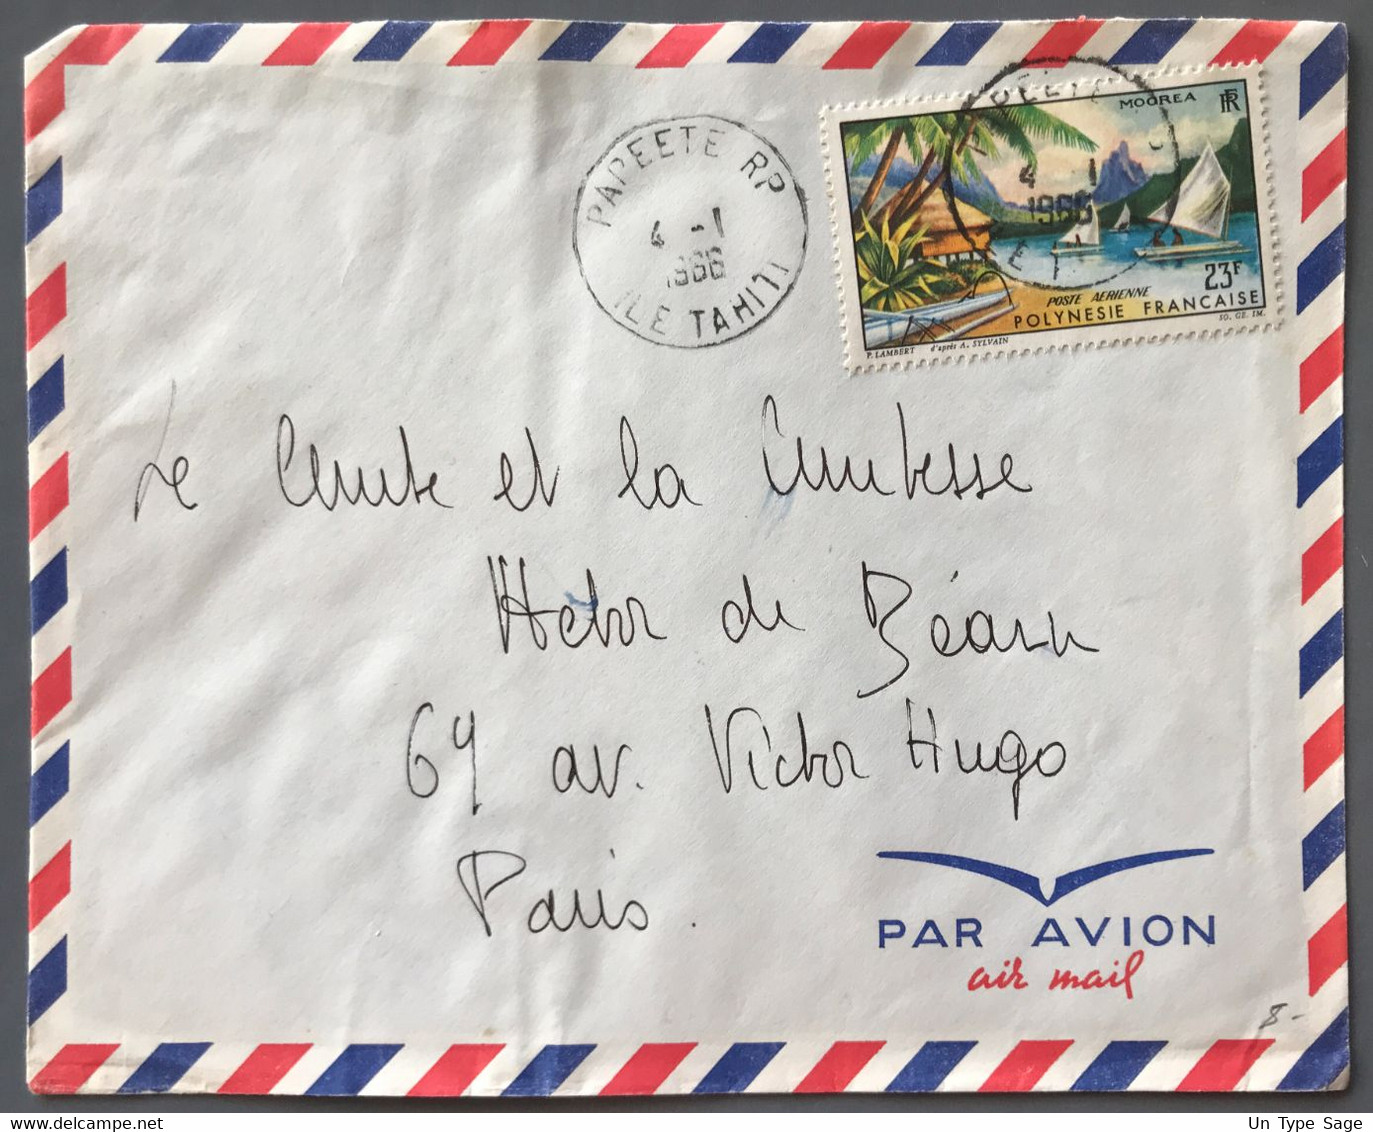 Polynésie Française PA N°9 Sur Enveloppe TAD Papeete R.P. Tahiti 4.1.1966 - (B2126) - Storia Postale